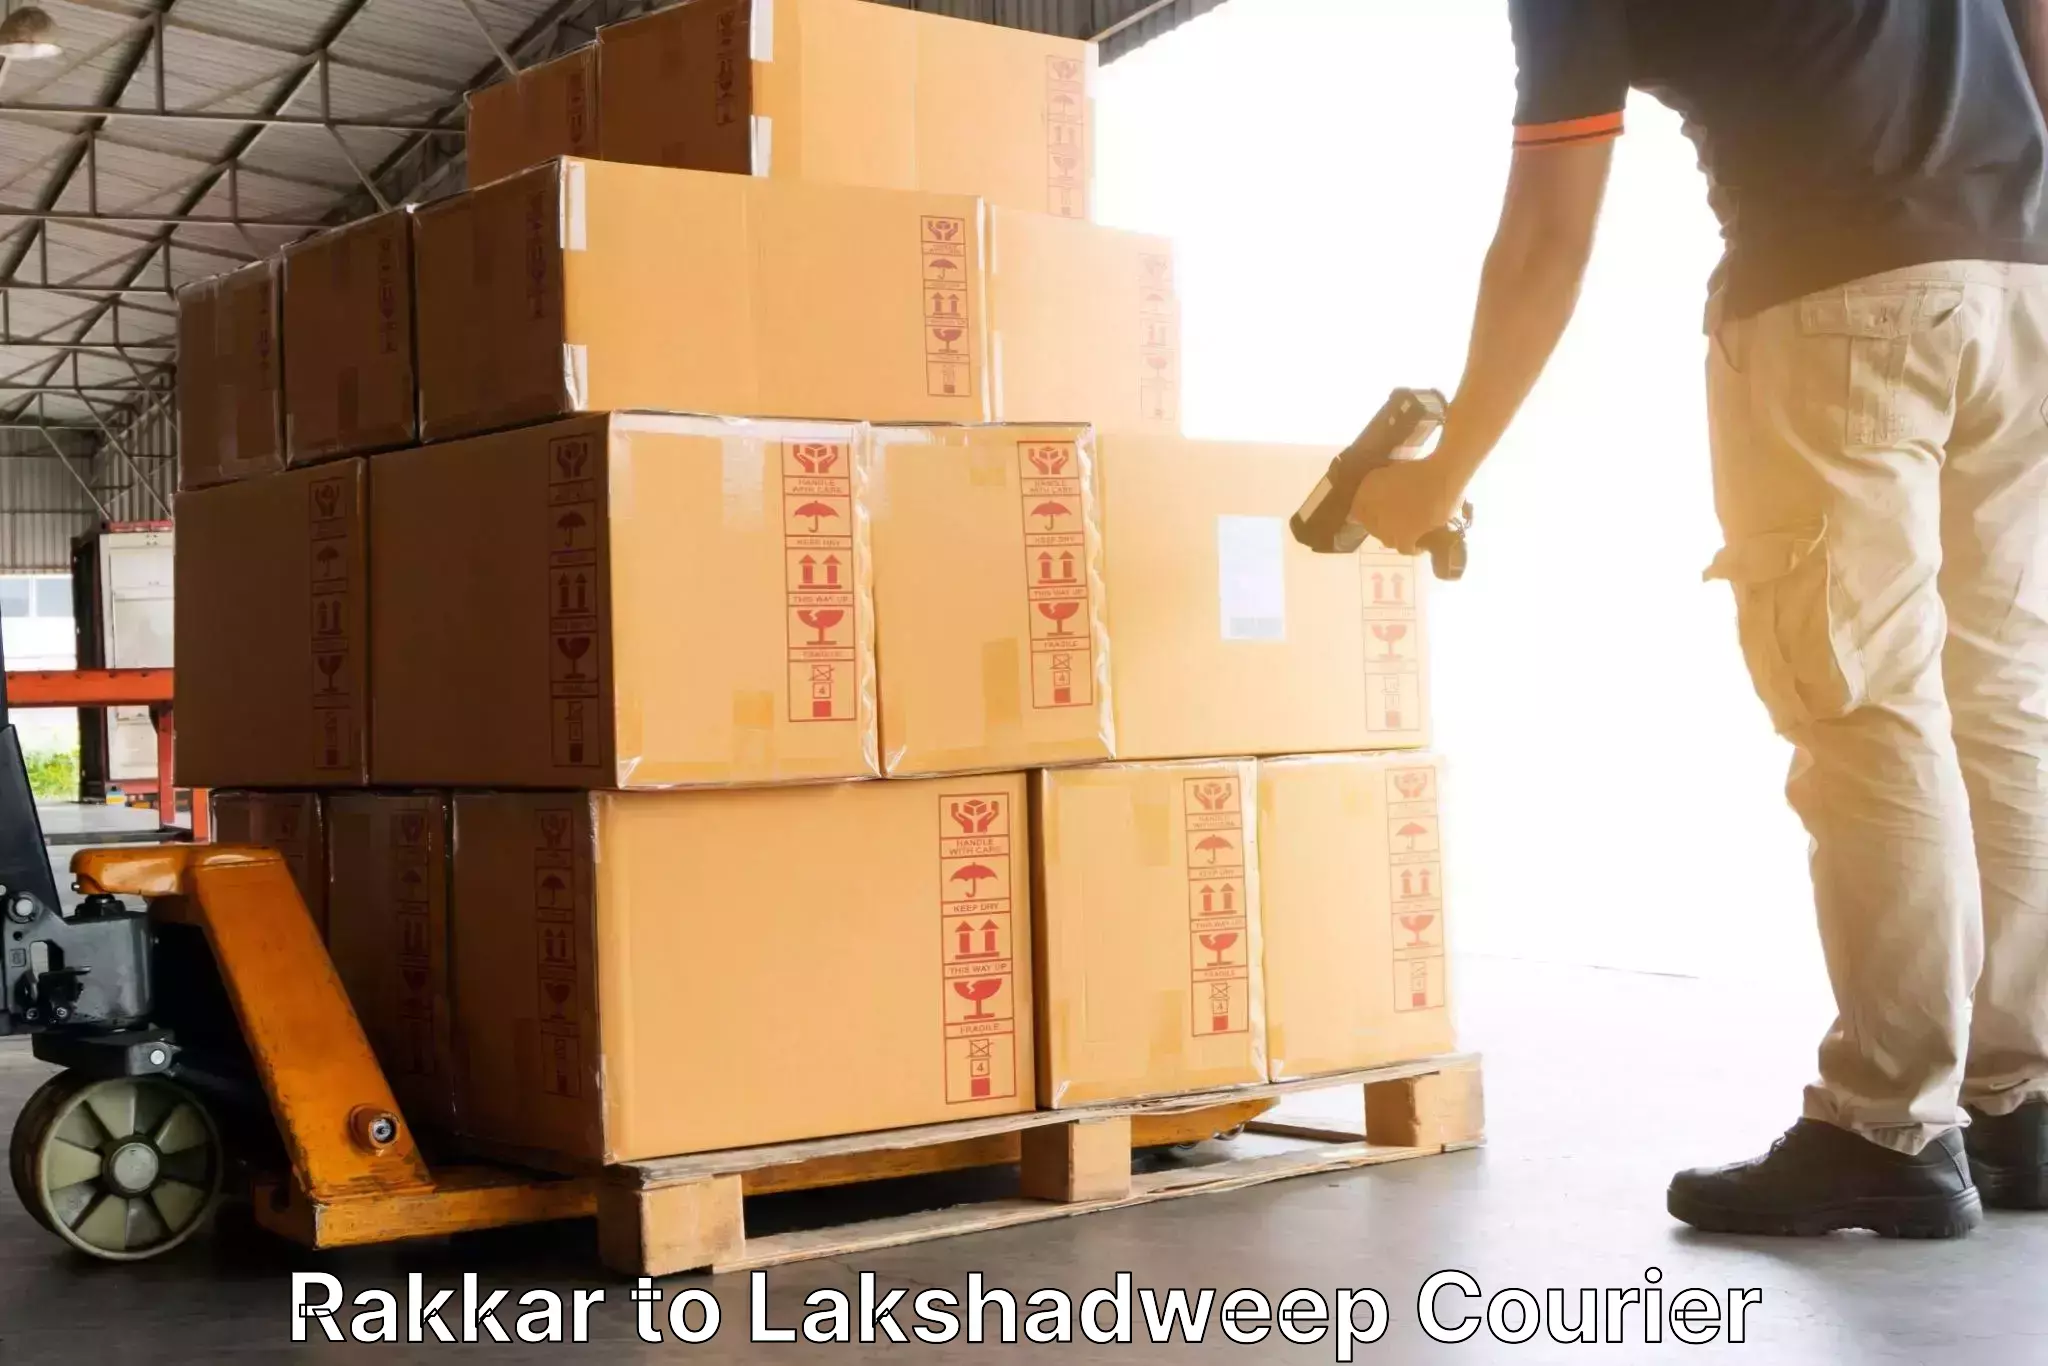 Express mail service Rakkar to Lakshadweep